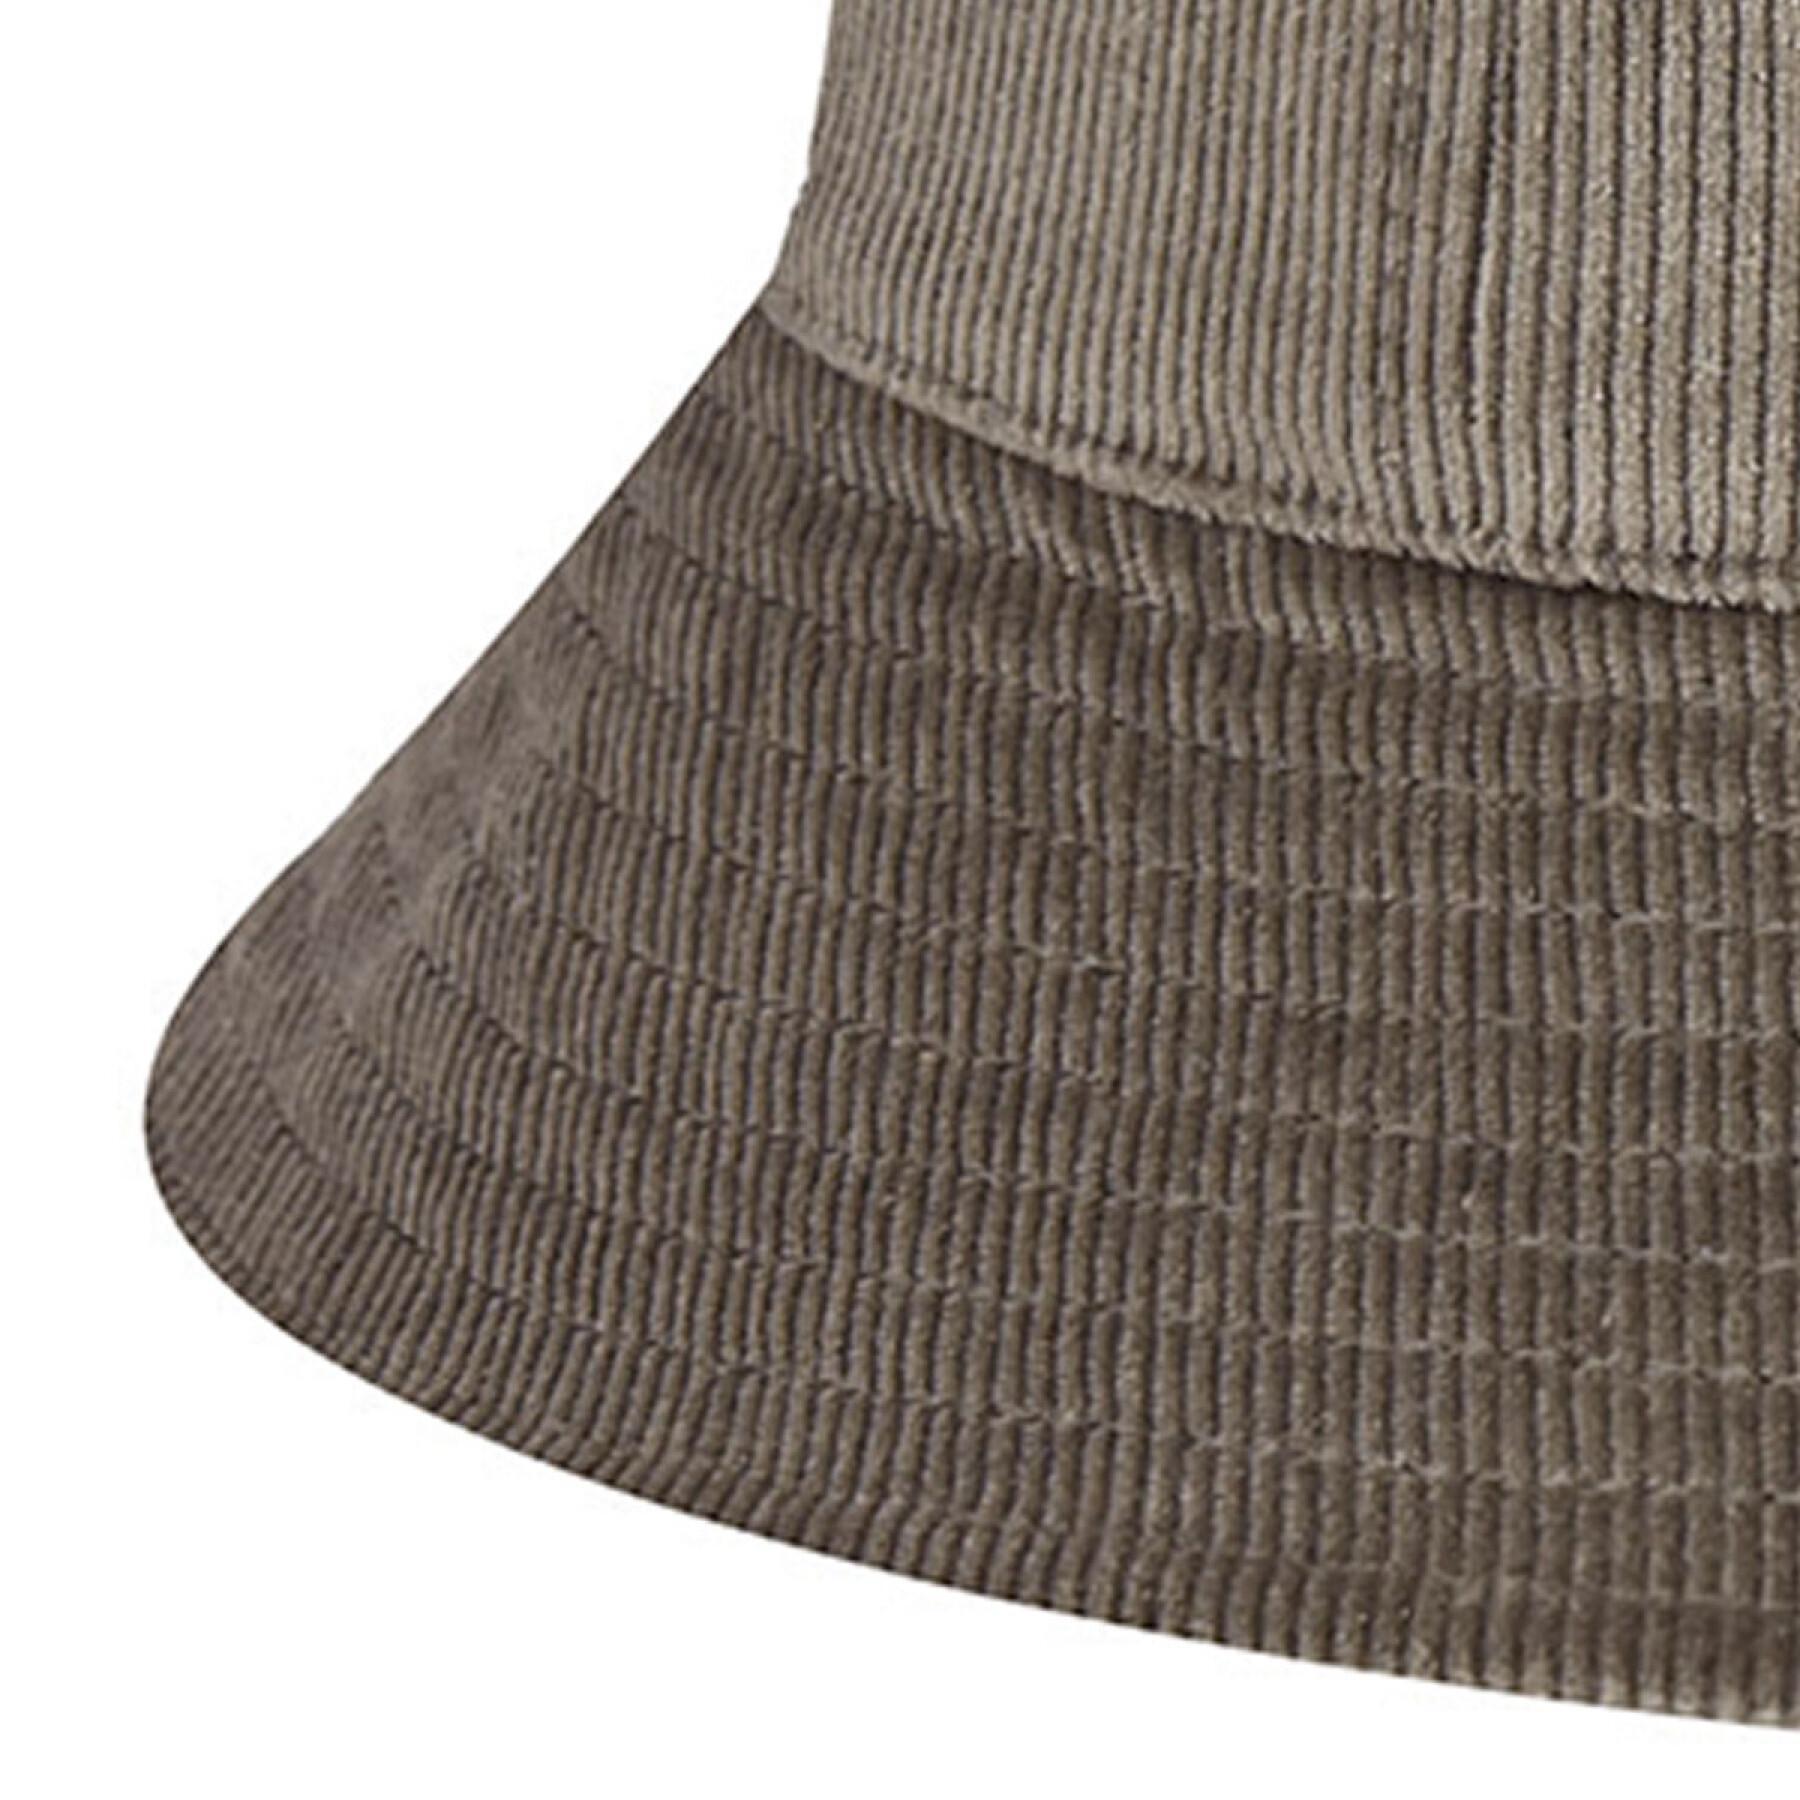 Bucket Hat Kangol Cord Casual